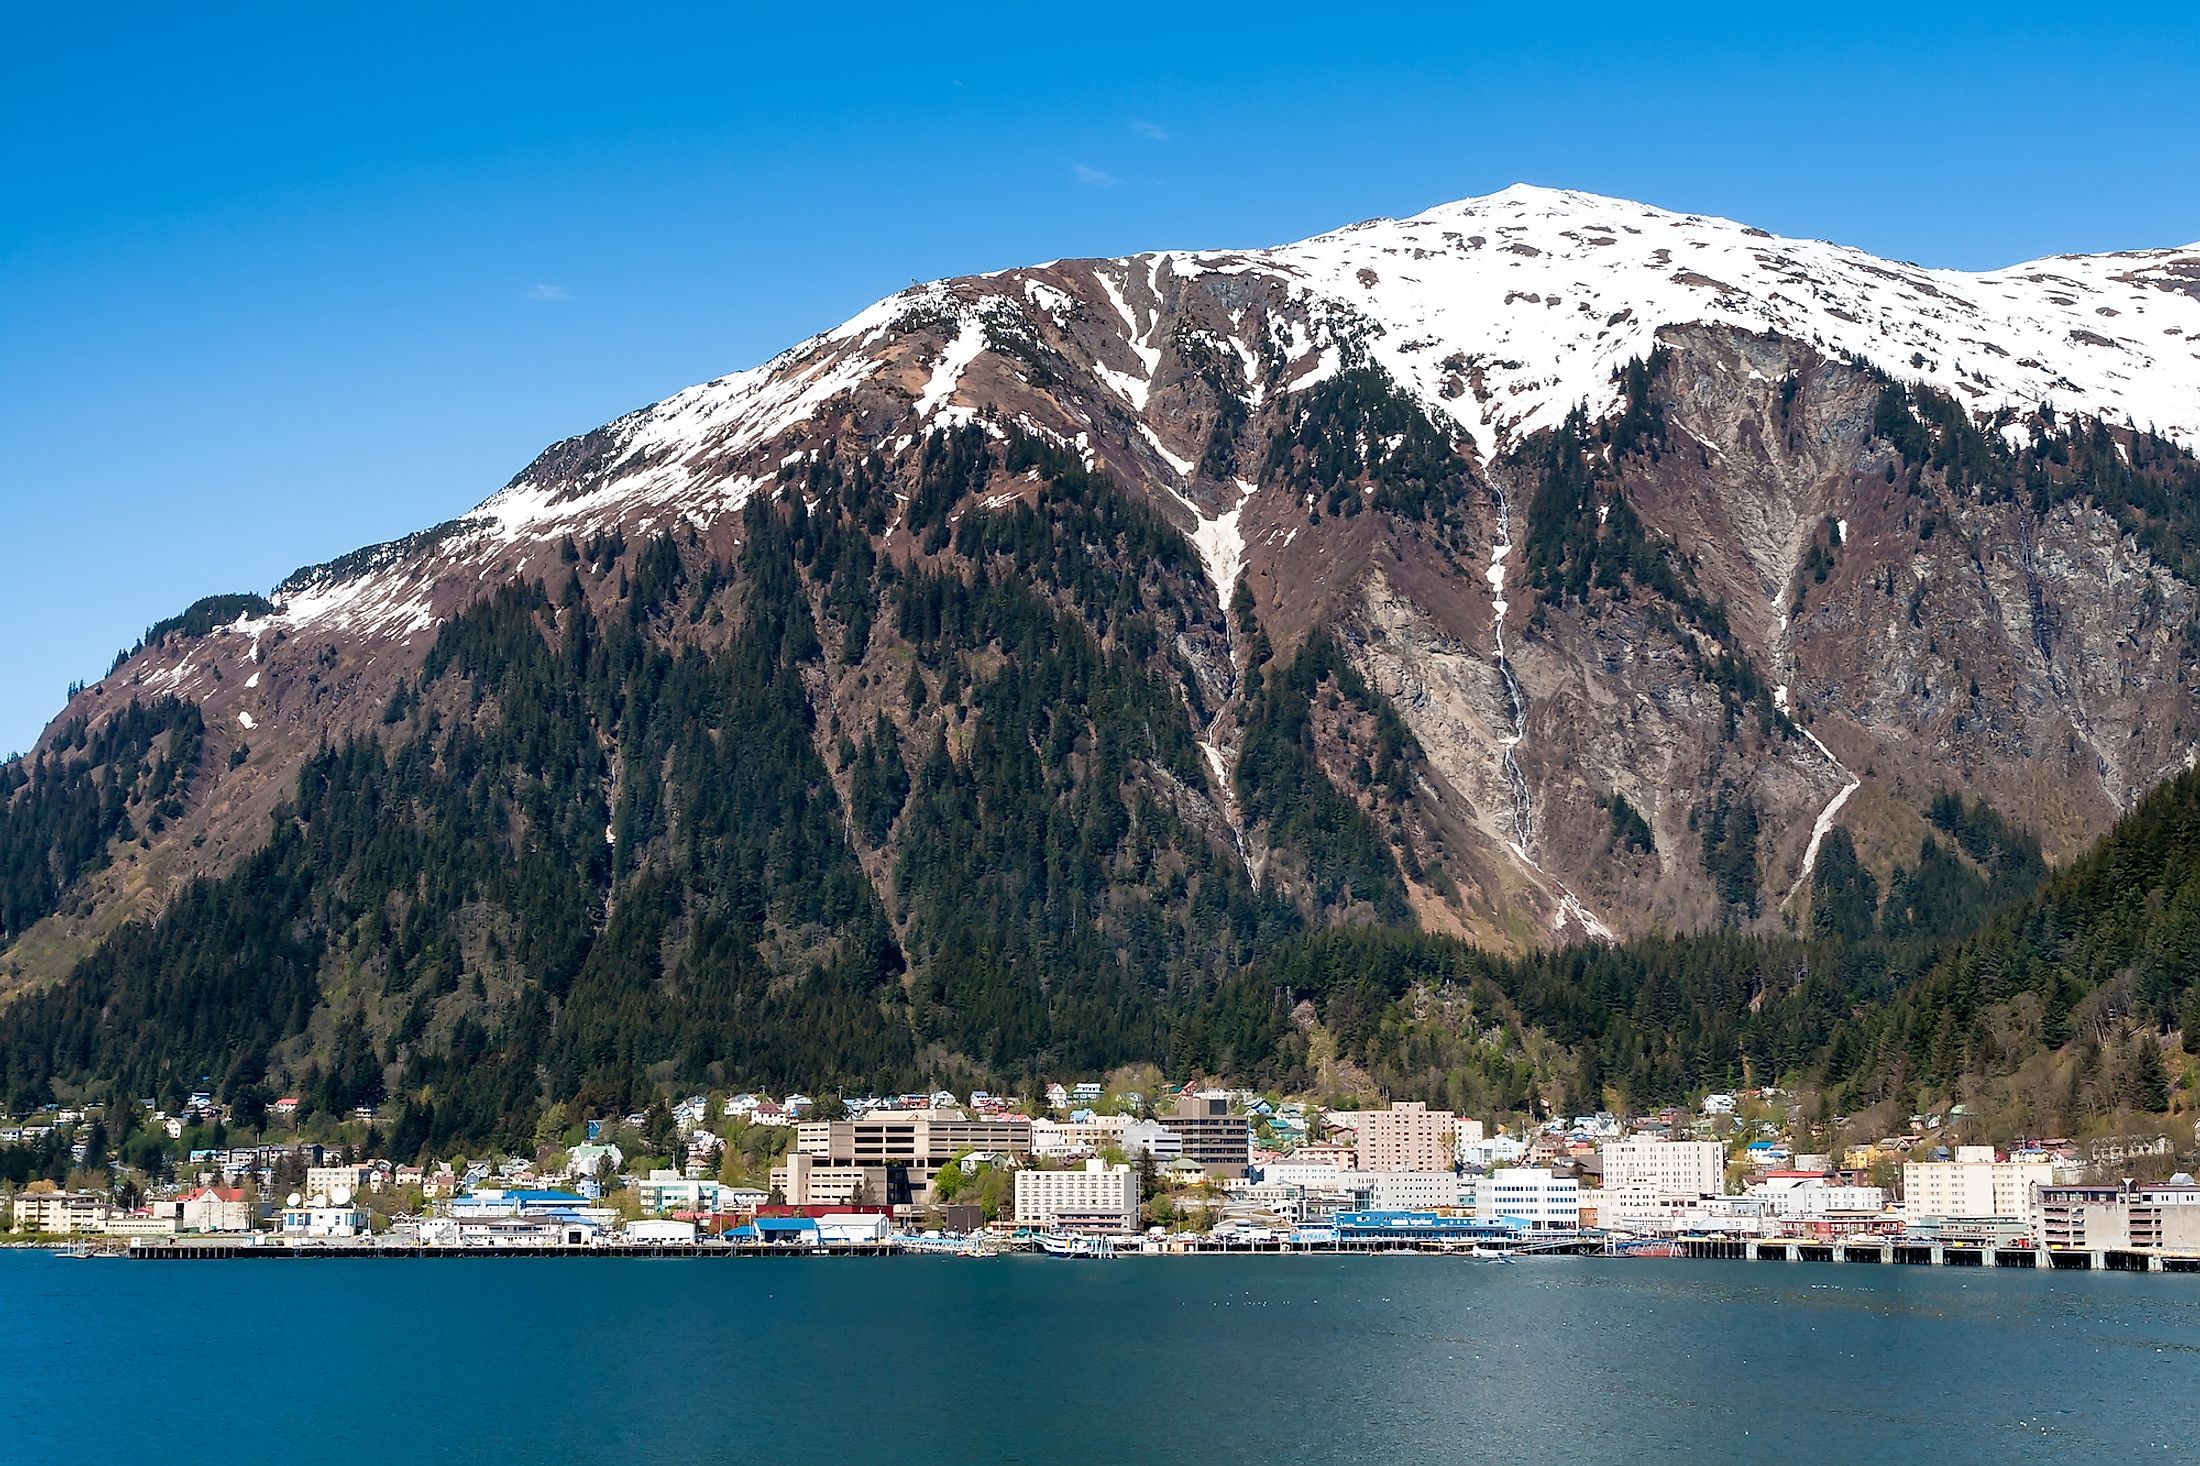 Mount Juneau and the city of Juneau, capital city of Alaska.